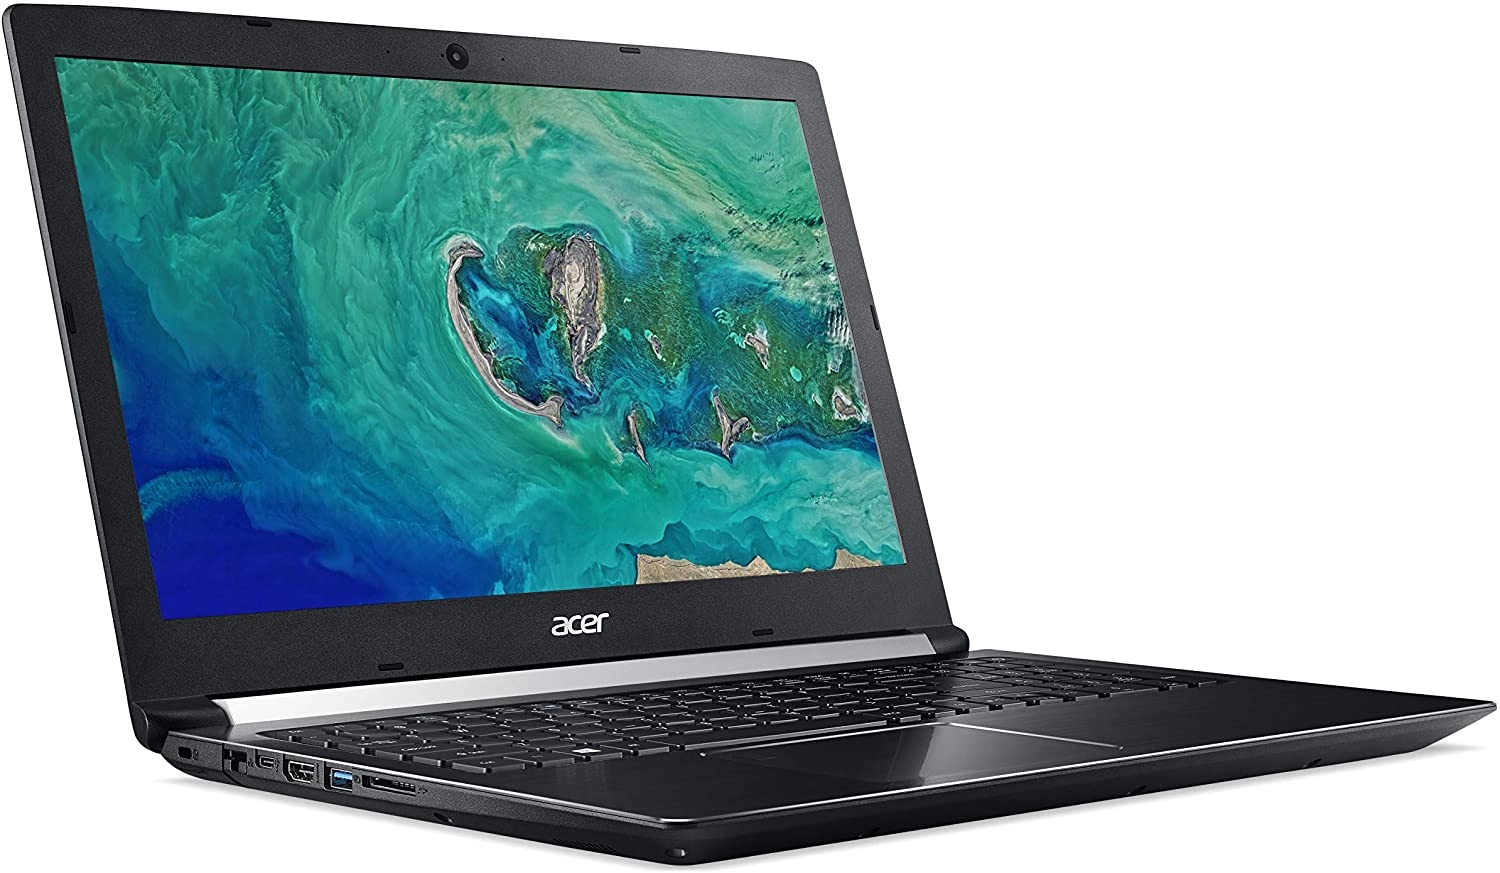 Acer Aspire 7 laptop image